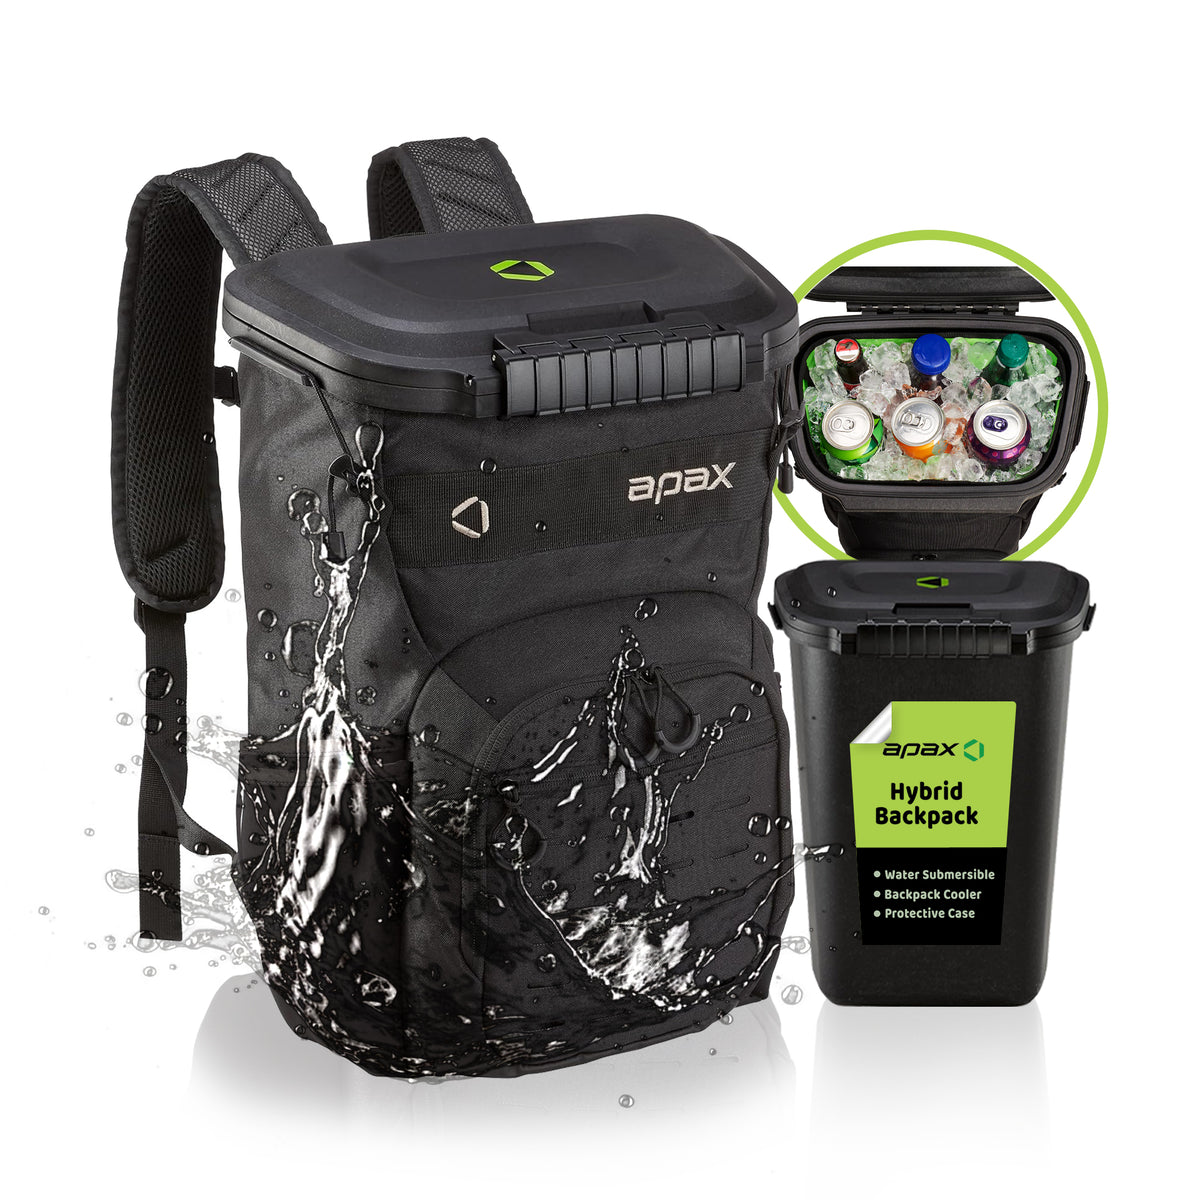 Apax Sport Hybrid Everyday Travel Backpack with Waterproof Backpack Cooler